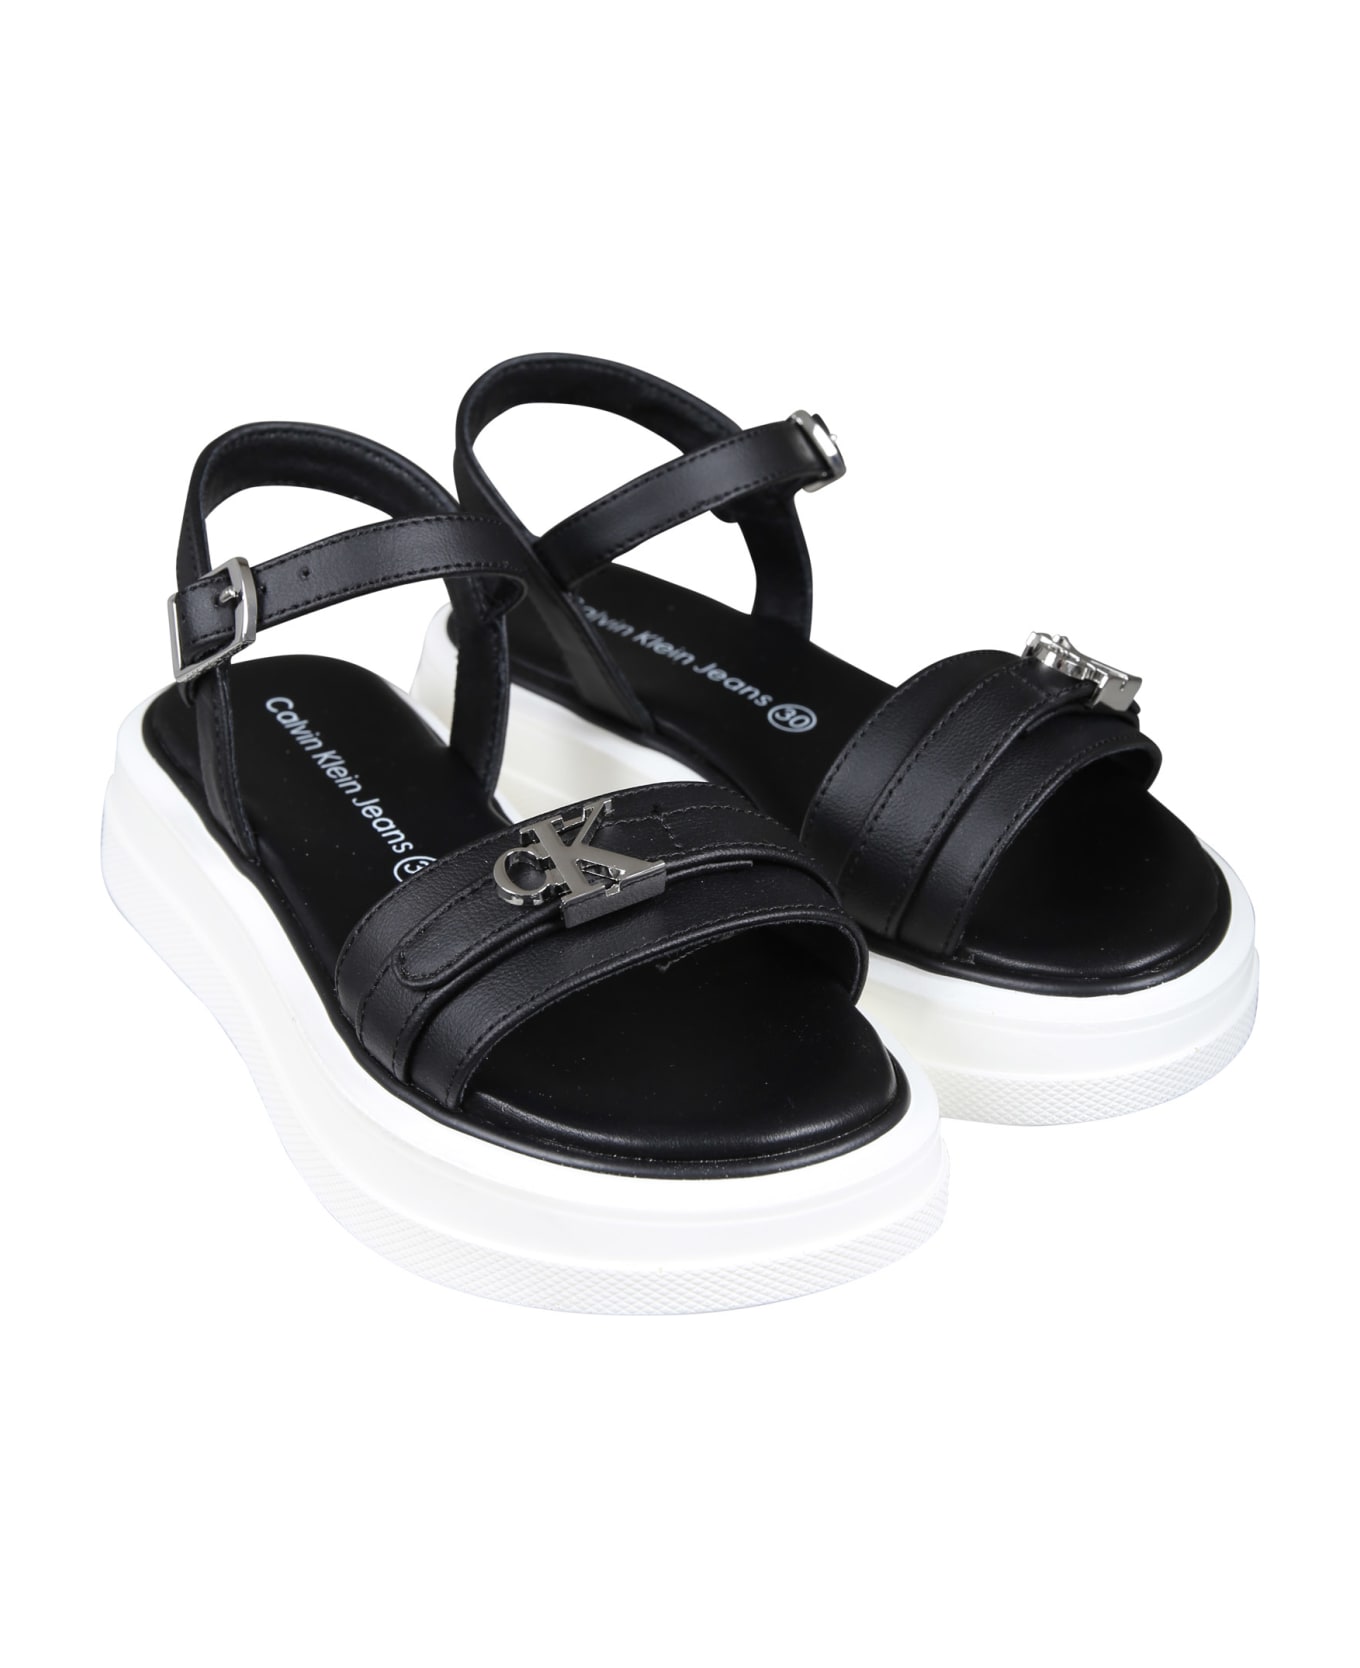 Calvin Klein Black Sandals For Girl With Logo - Black